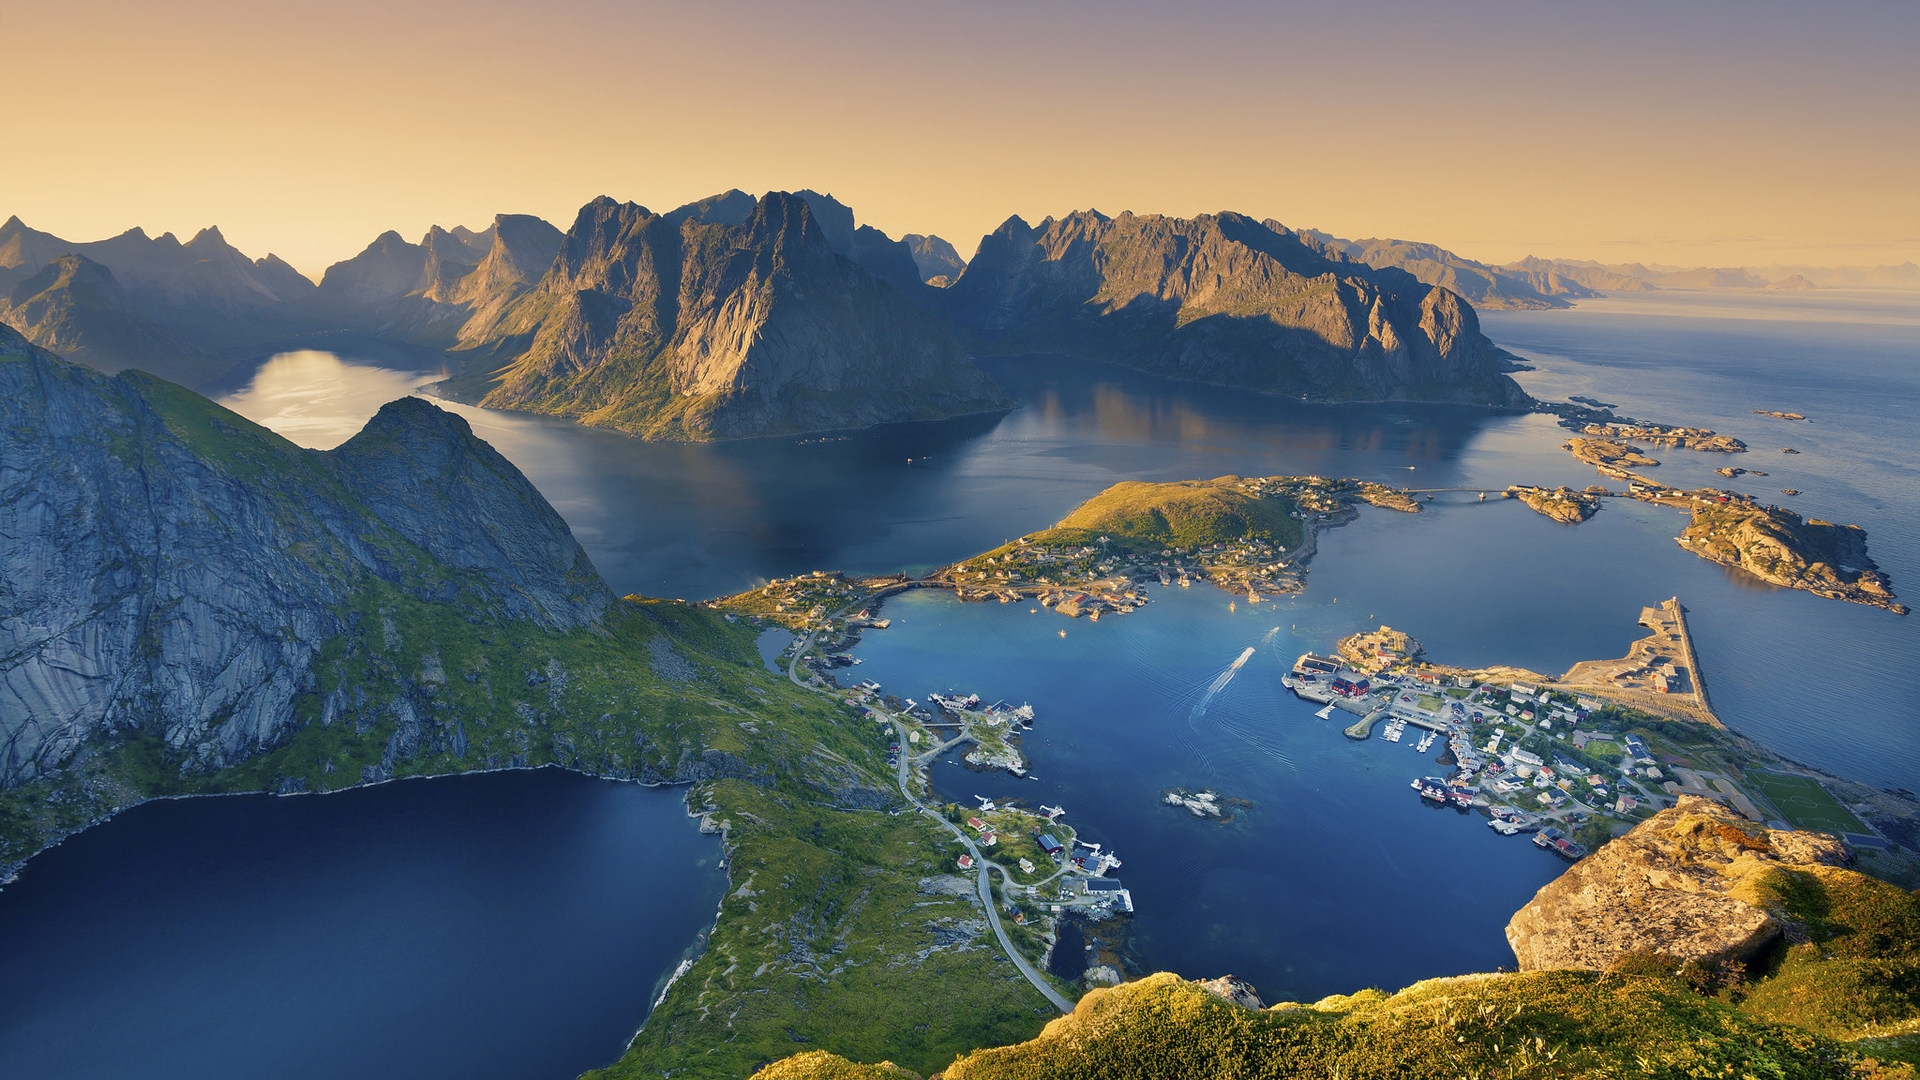  Lofoten Islands Norway for 1920 x 1080 HDTV 1080p resolution